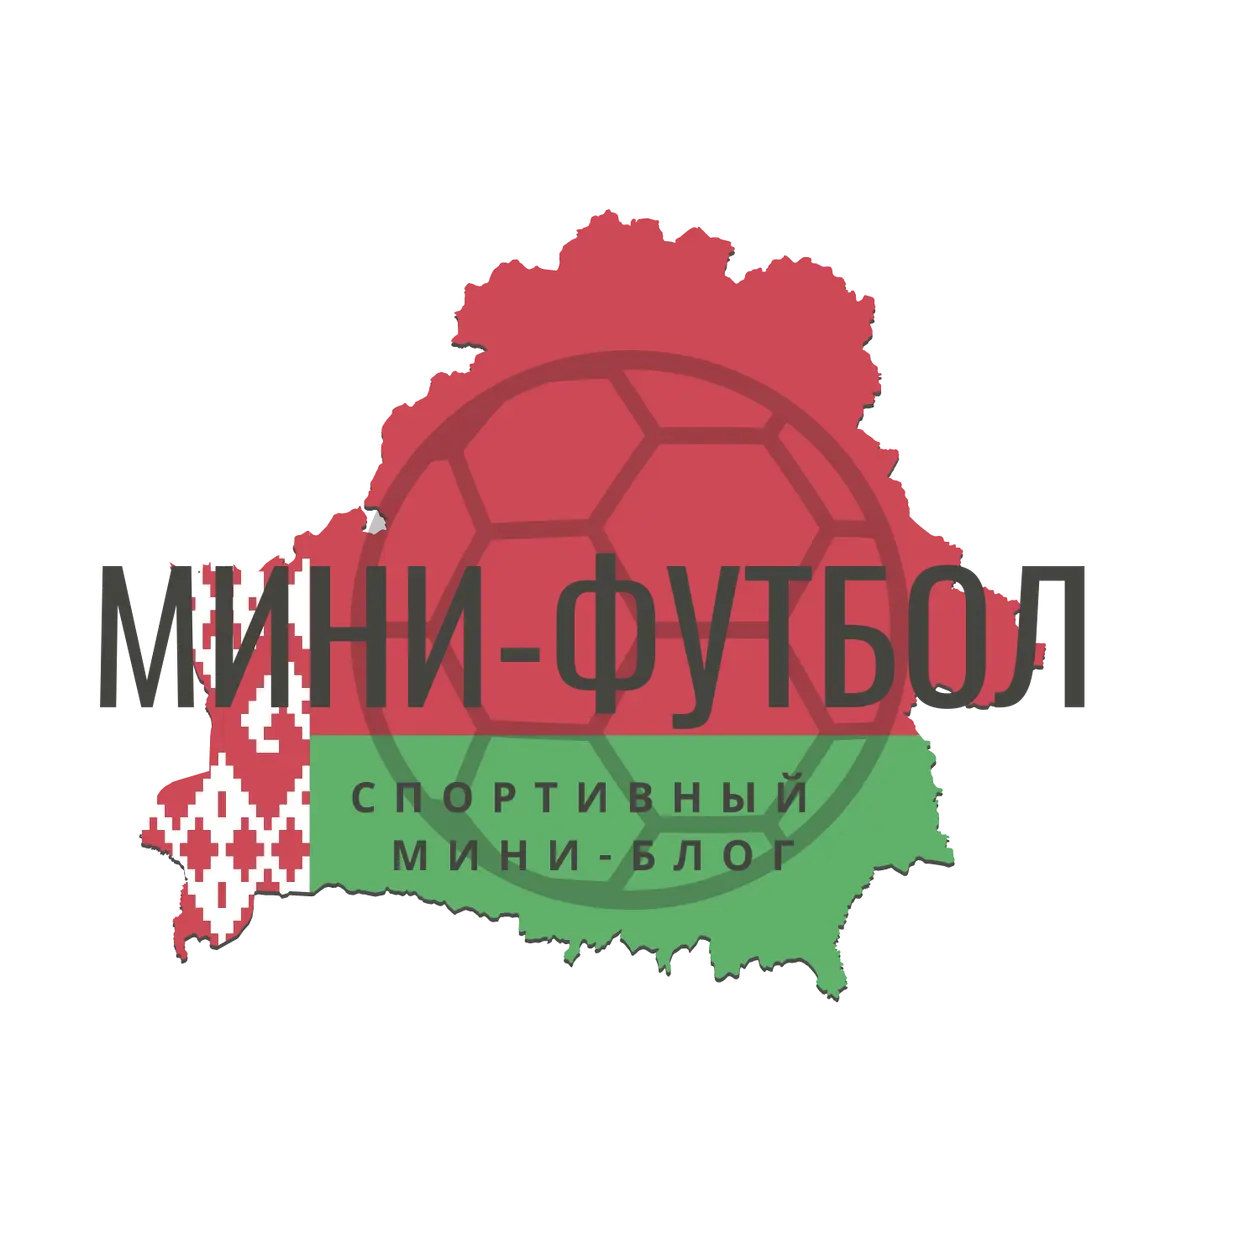 Мини-футбол в Беларуси, какой он? Подготовка к сезону 20/21